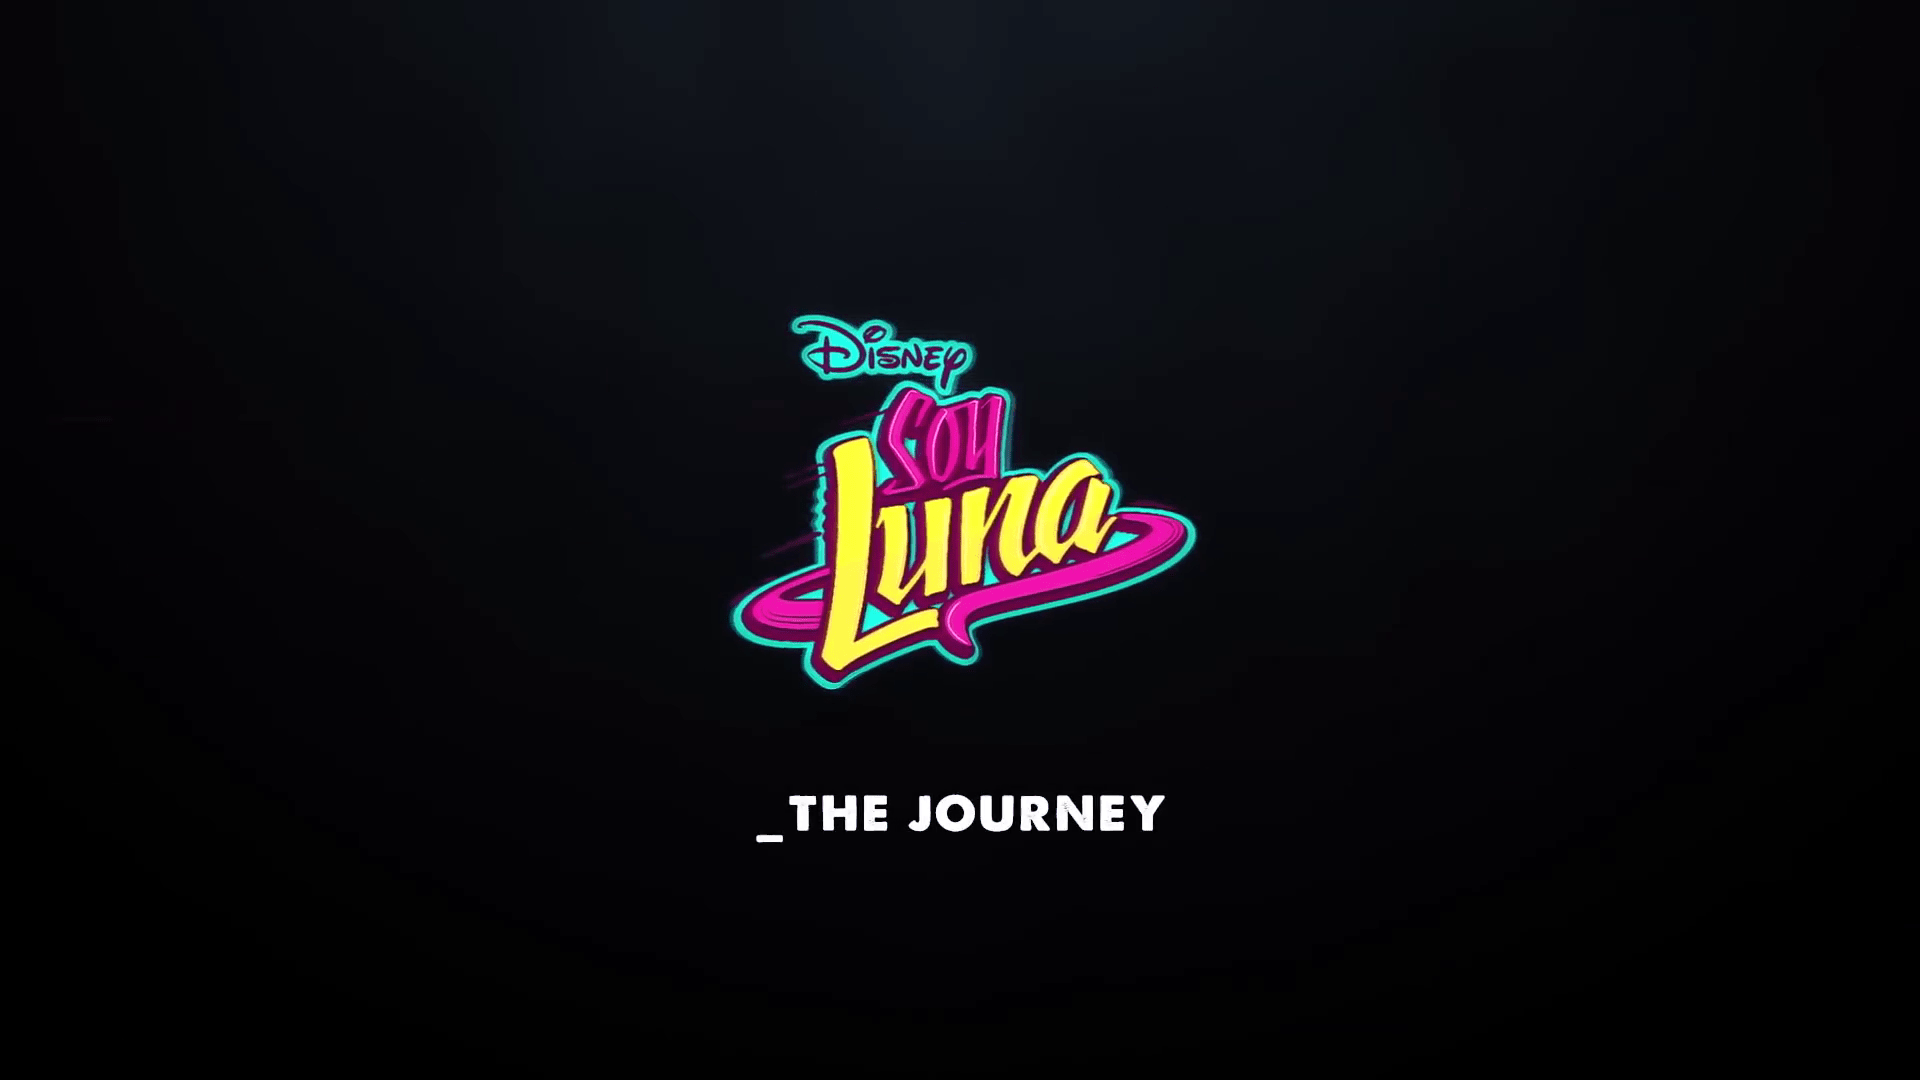 Soy luna the journey